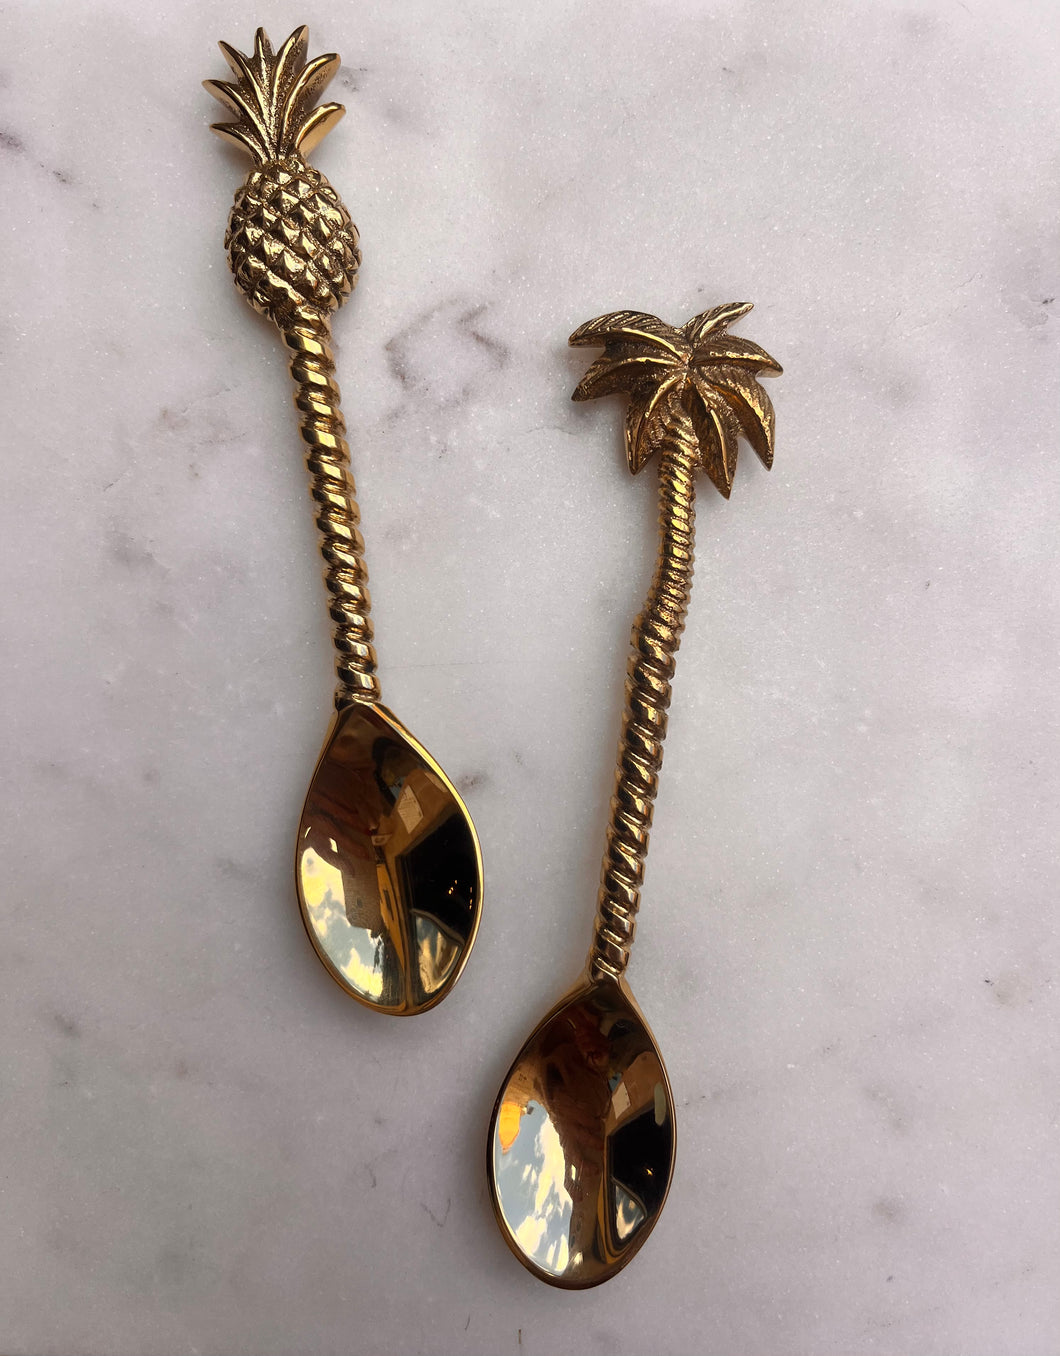 Bali spoon